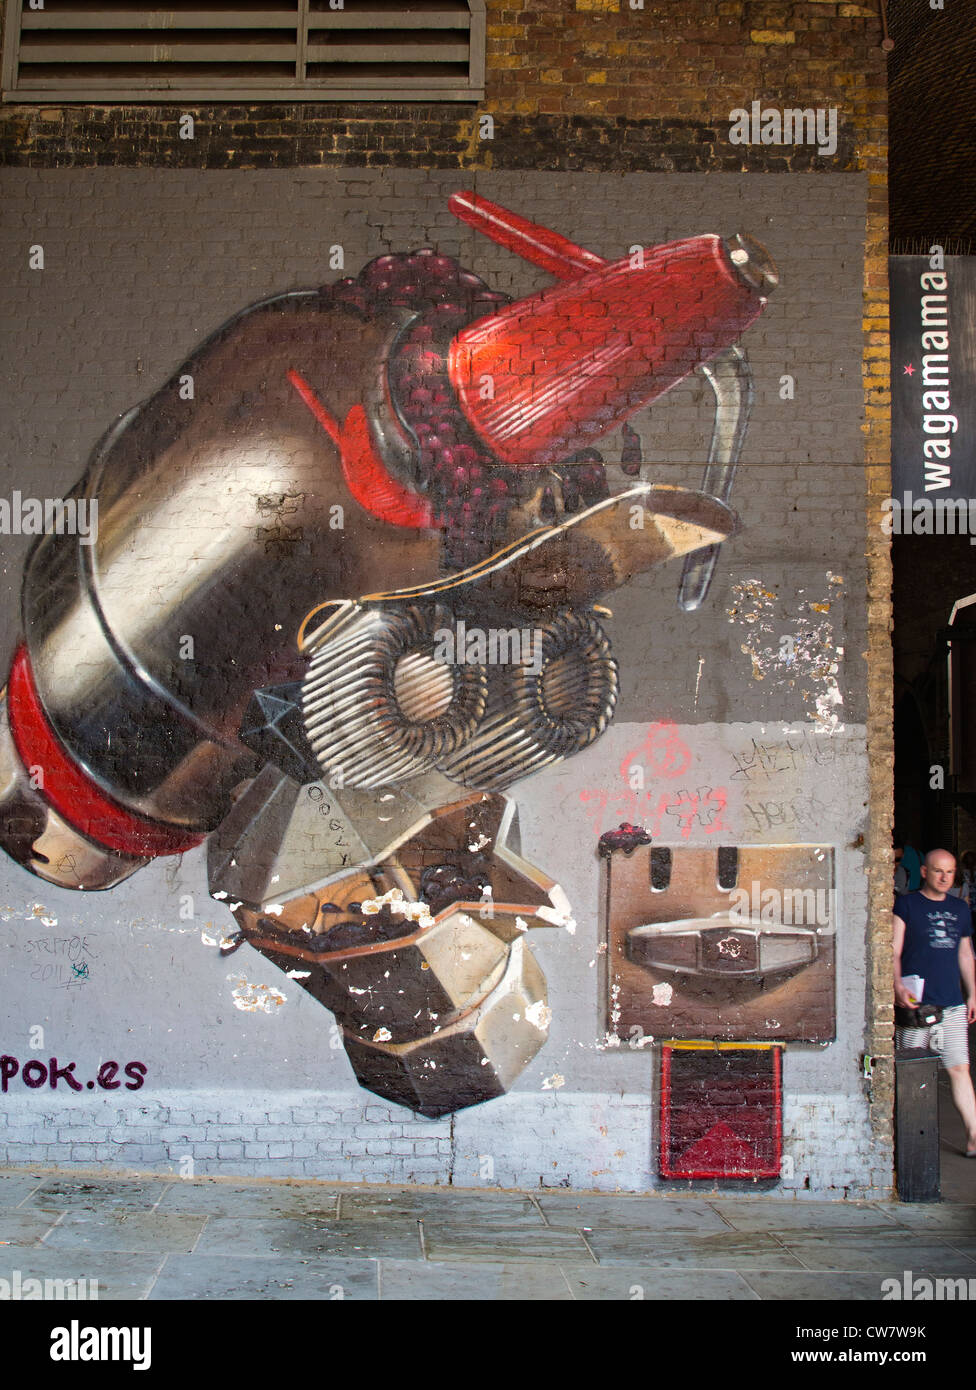 Bizarre mechanical graffiti near London Bridge Stock Photo